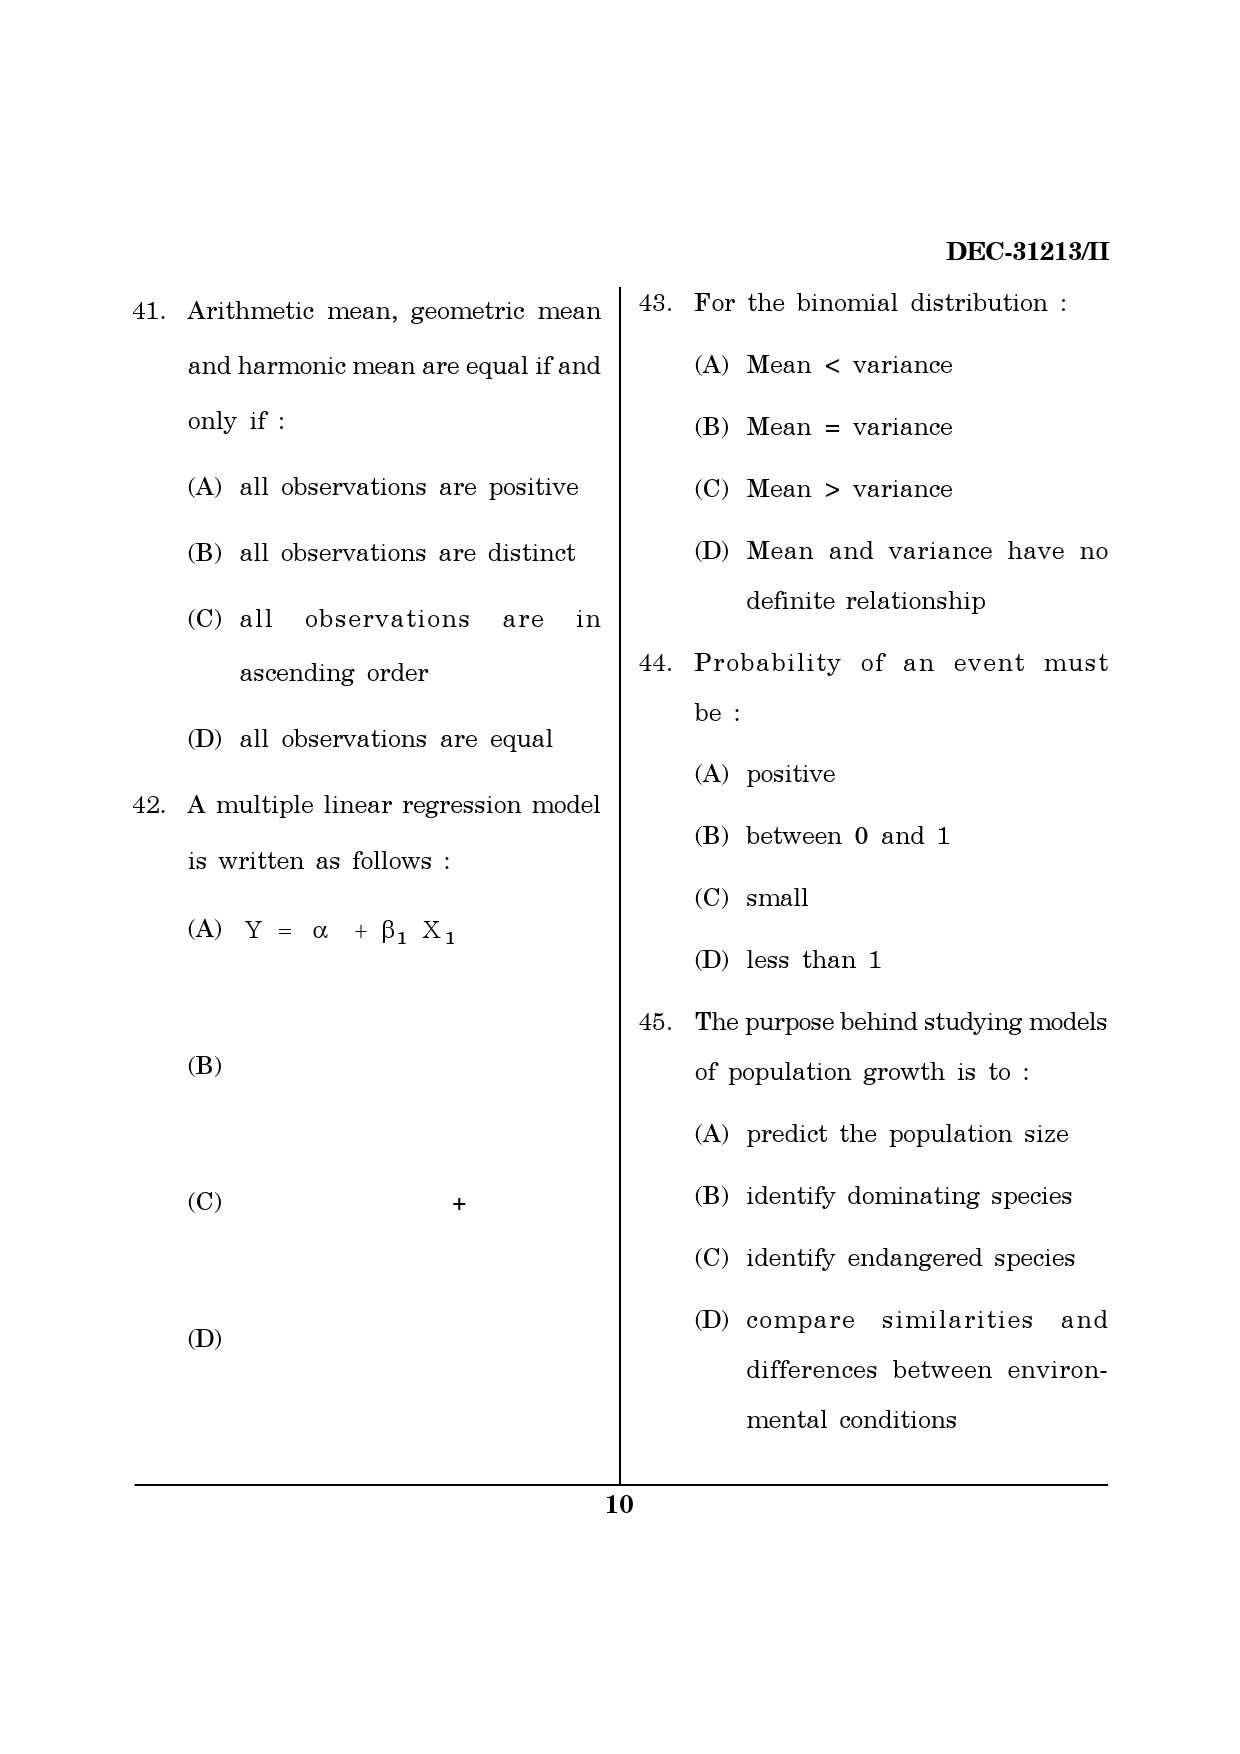 Maharashtra SET Environmental Sciences Question Paper II December 2013 9